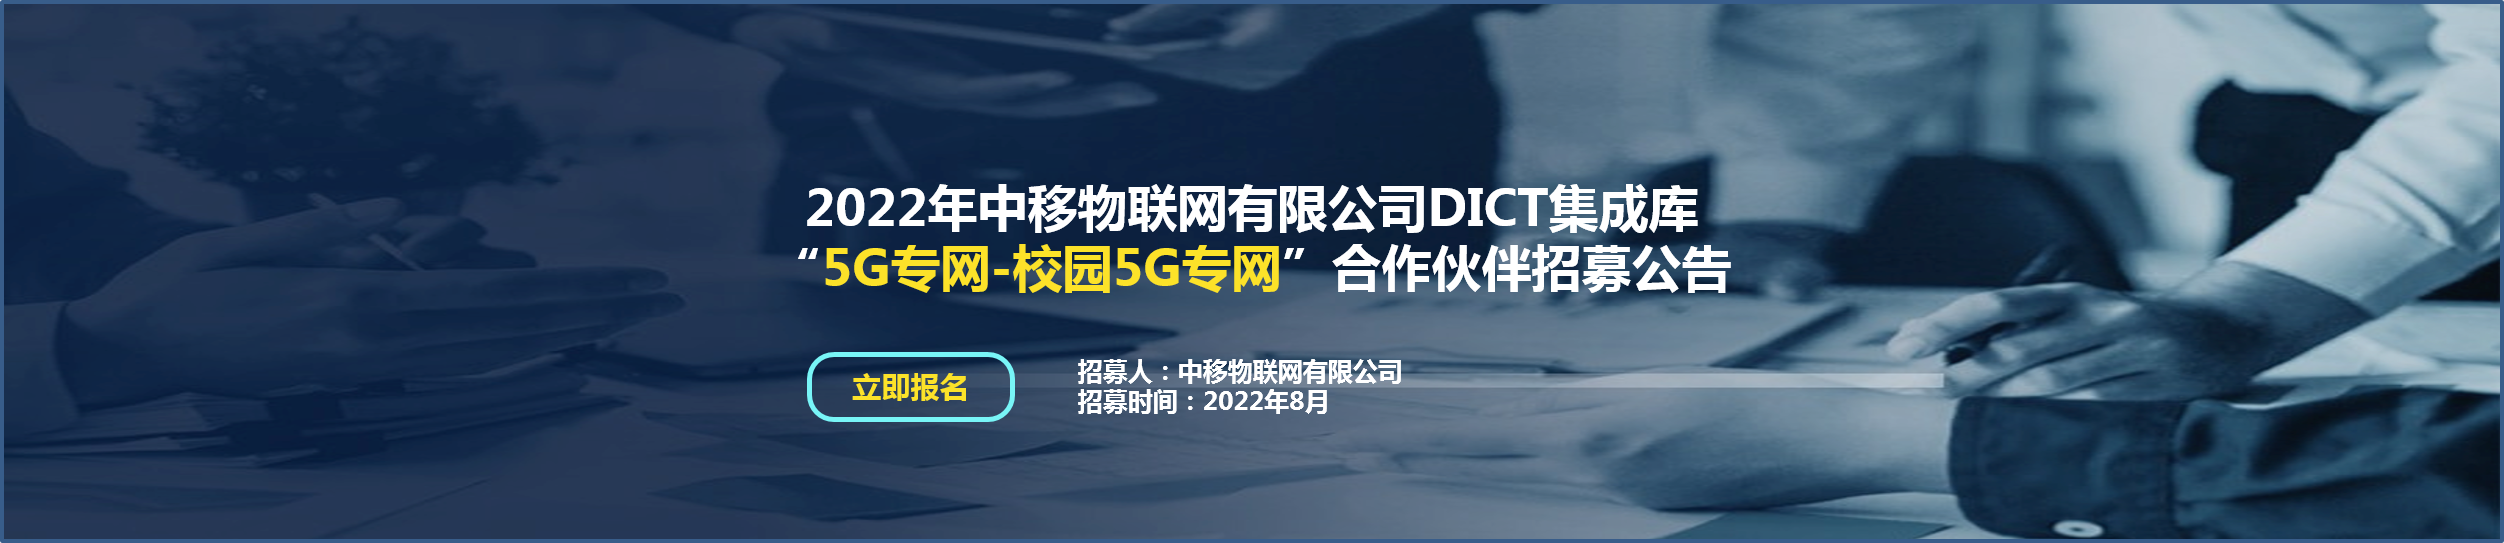 DICT集成库 “校园5G专网”